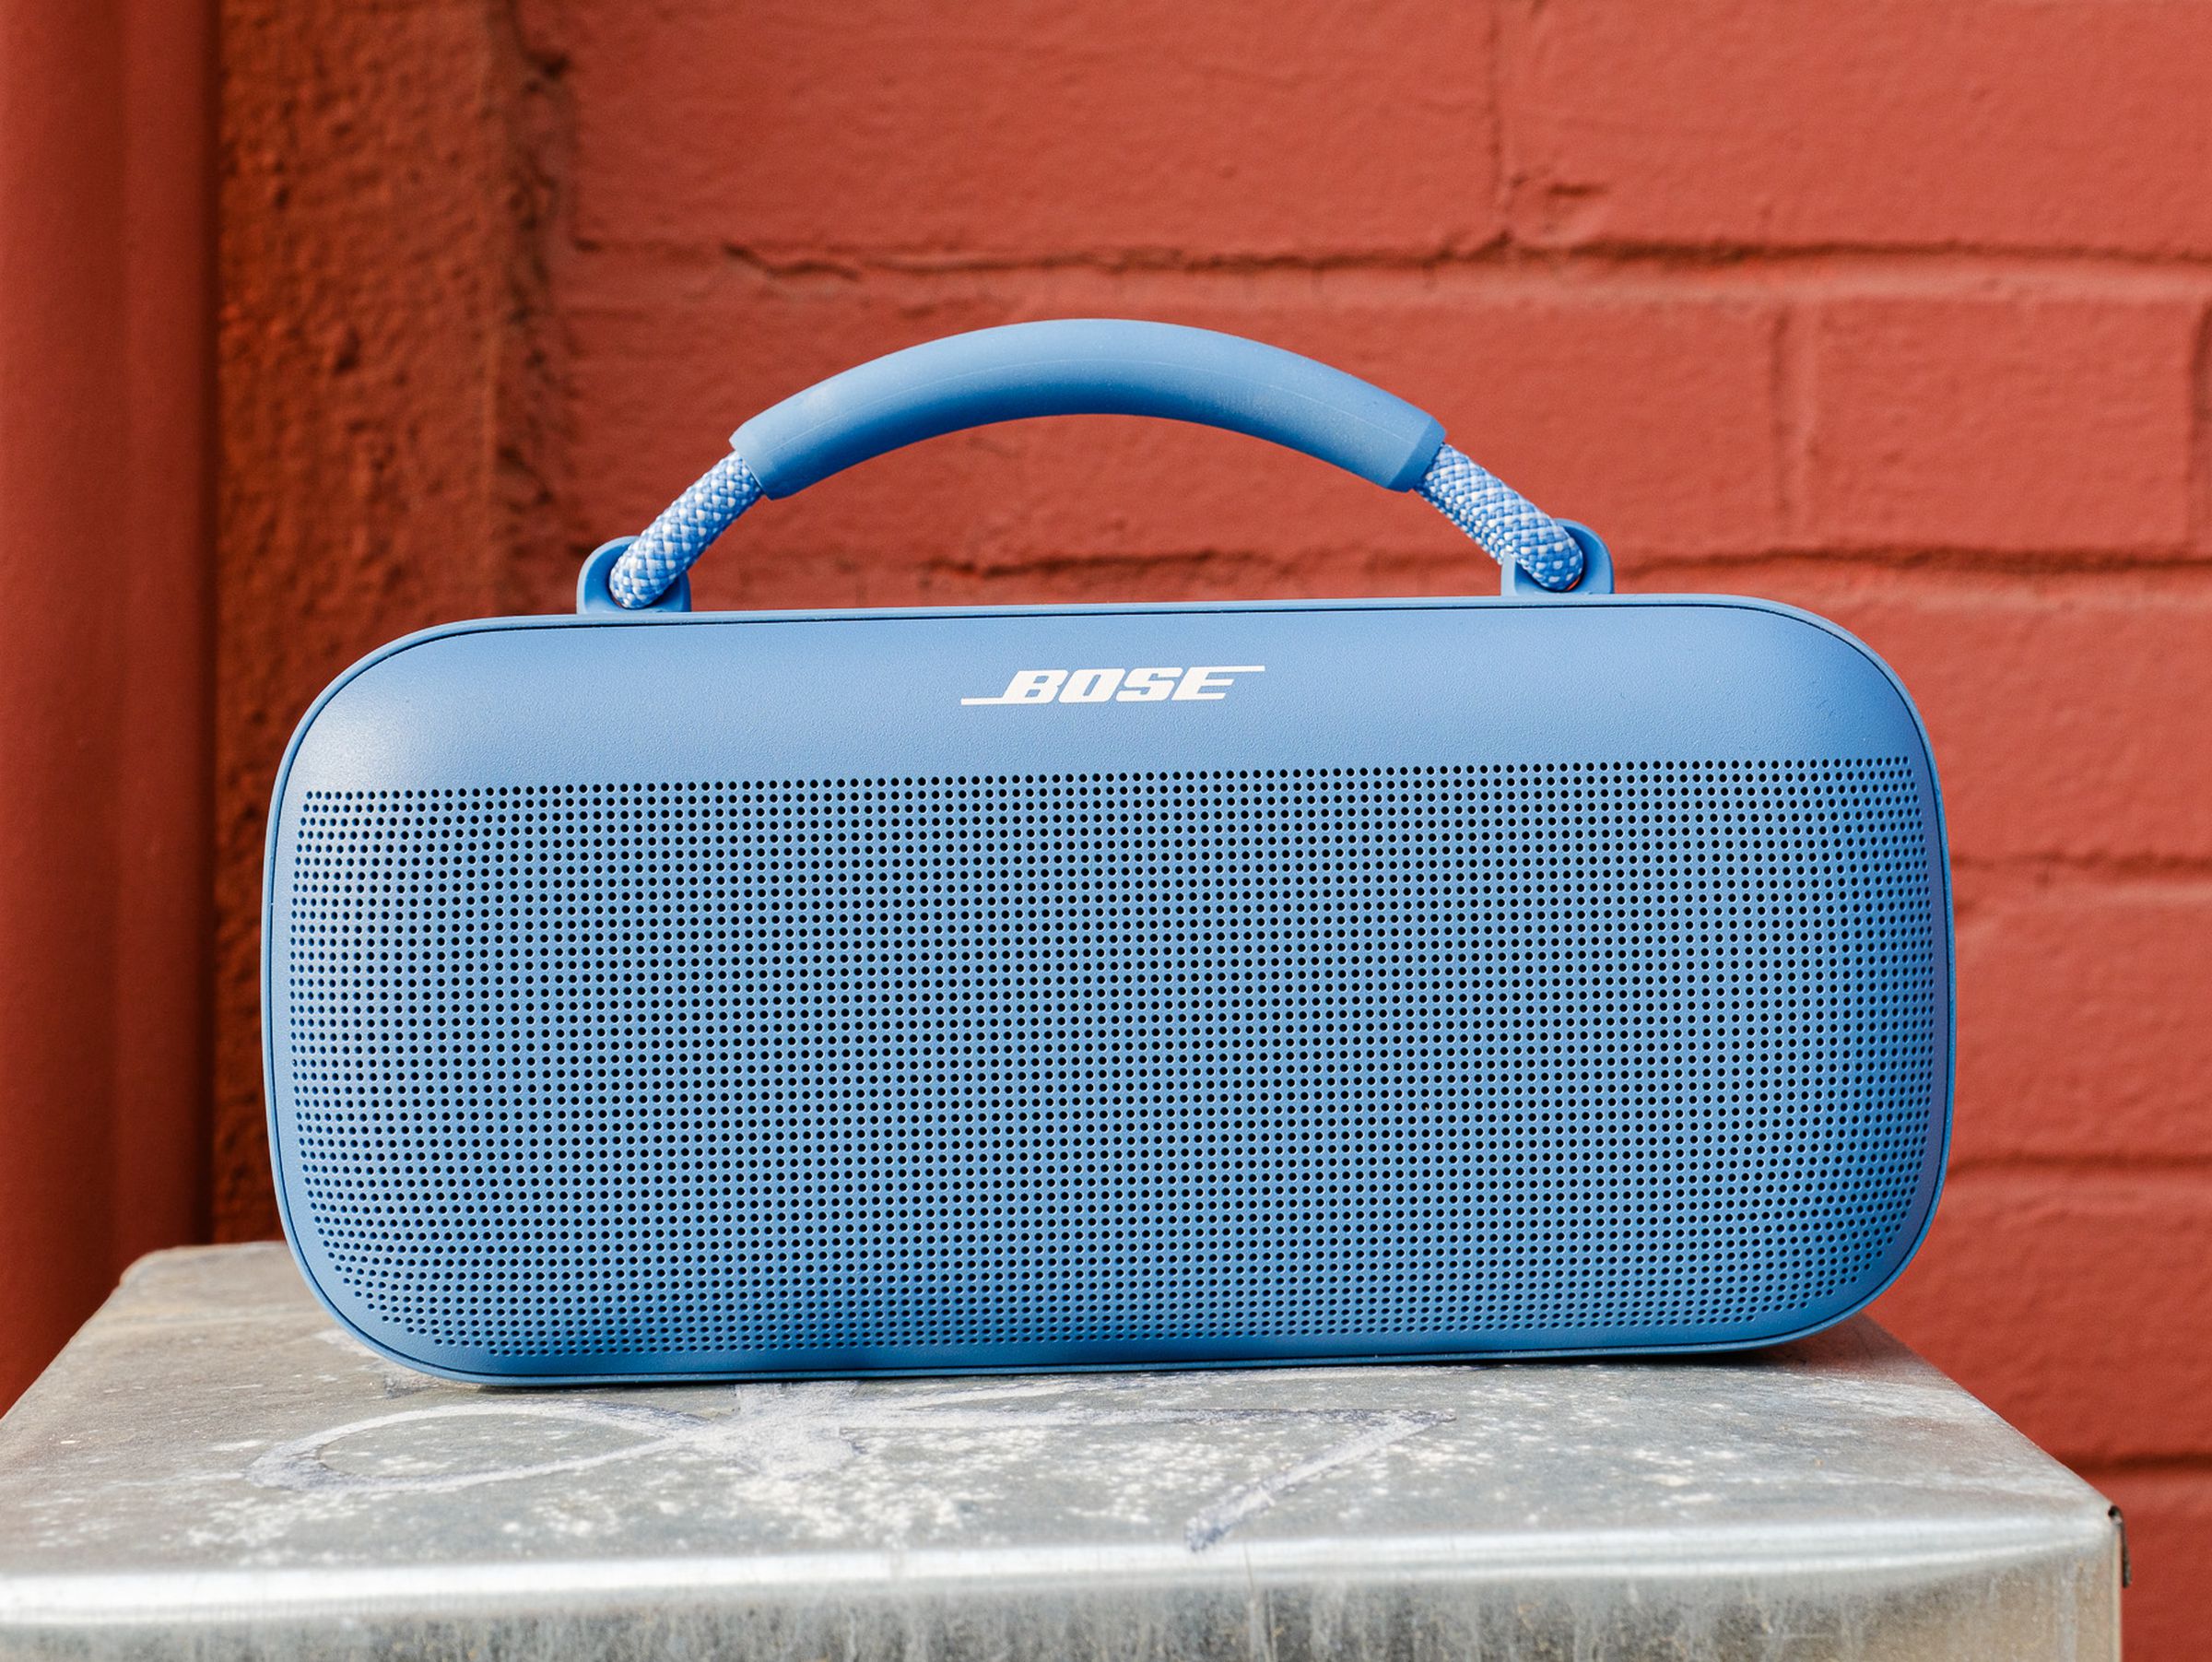 A photo of Bose’s blue SoundLink Max portable speaker.